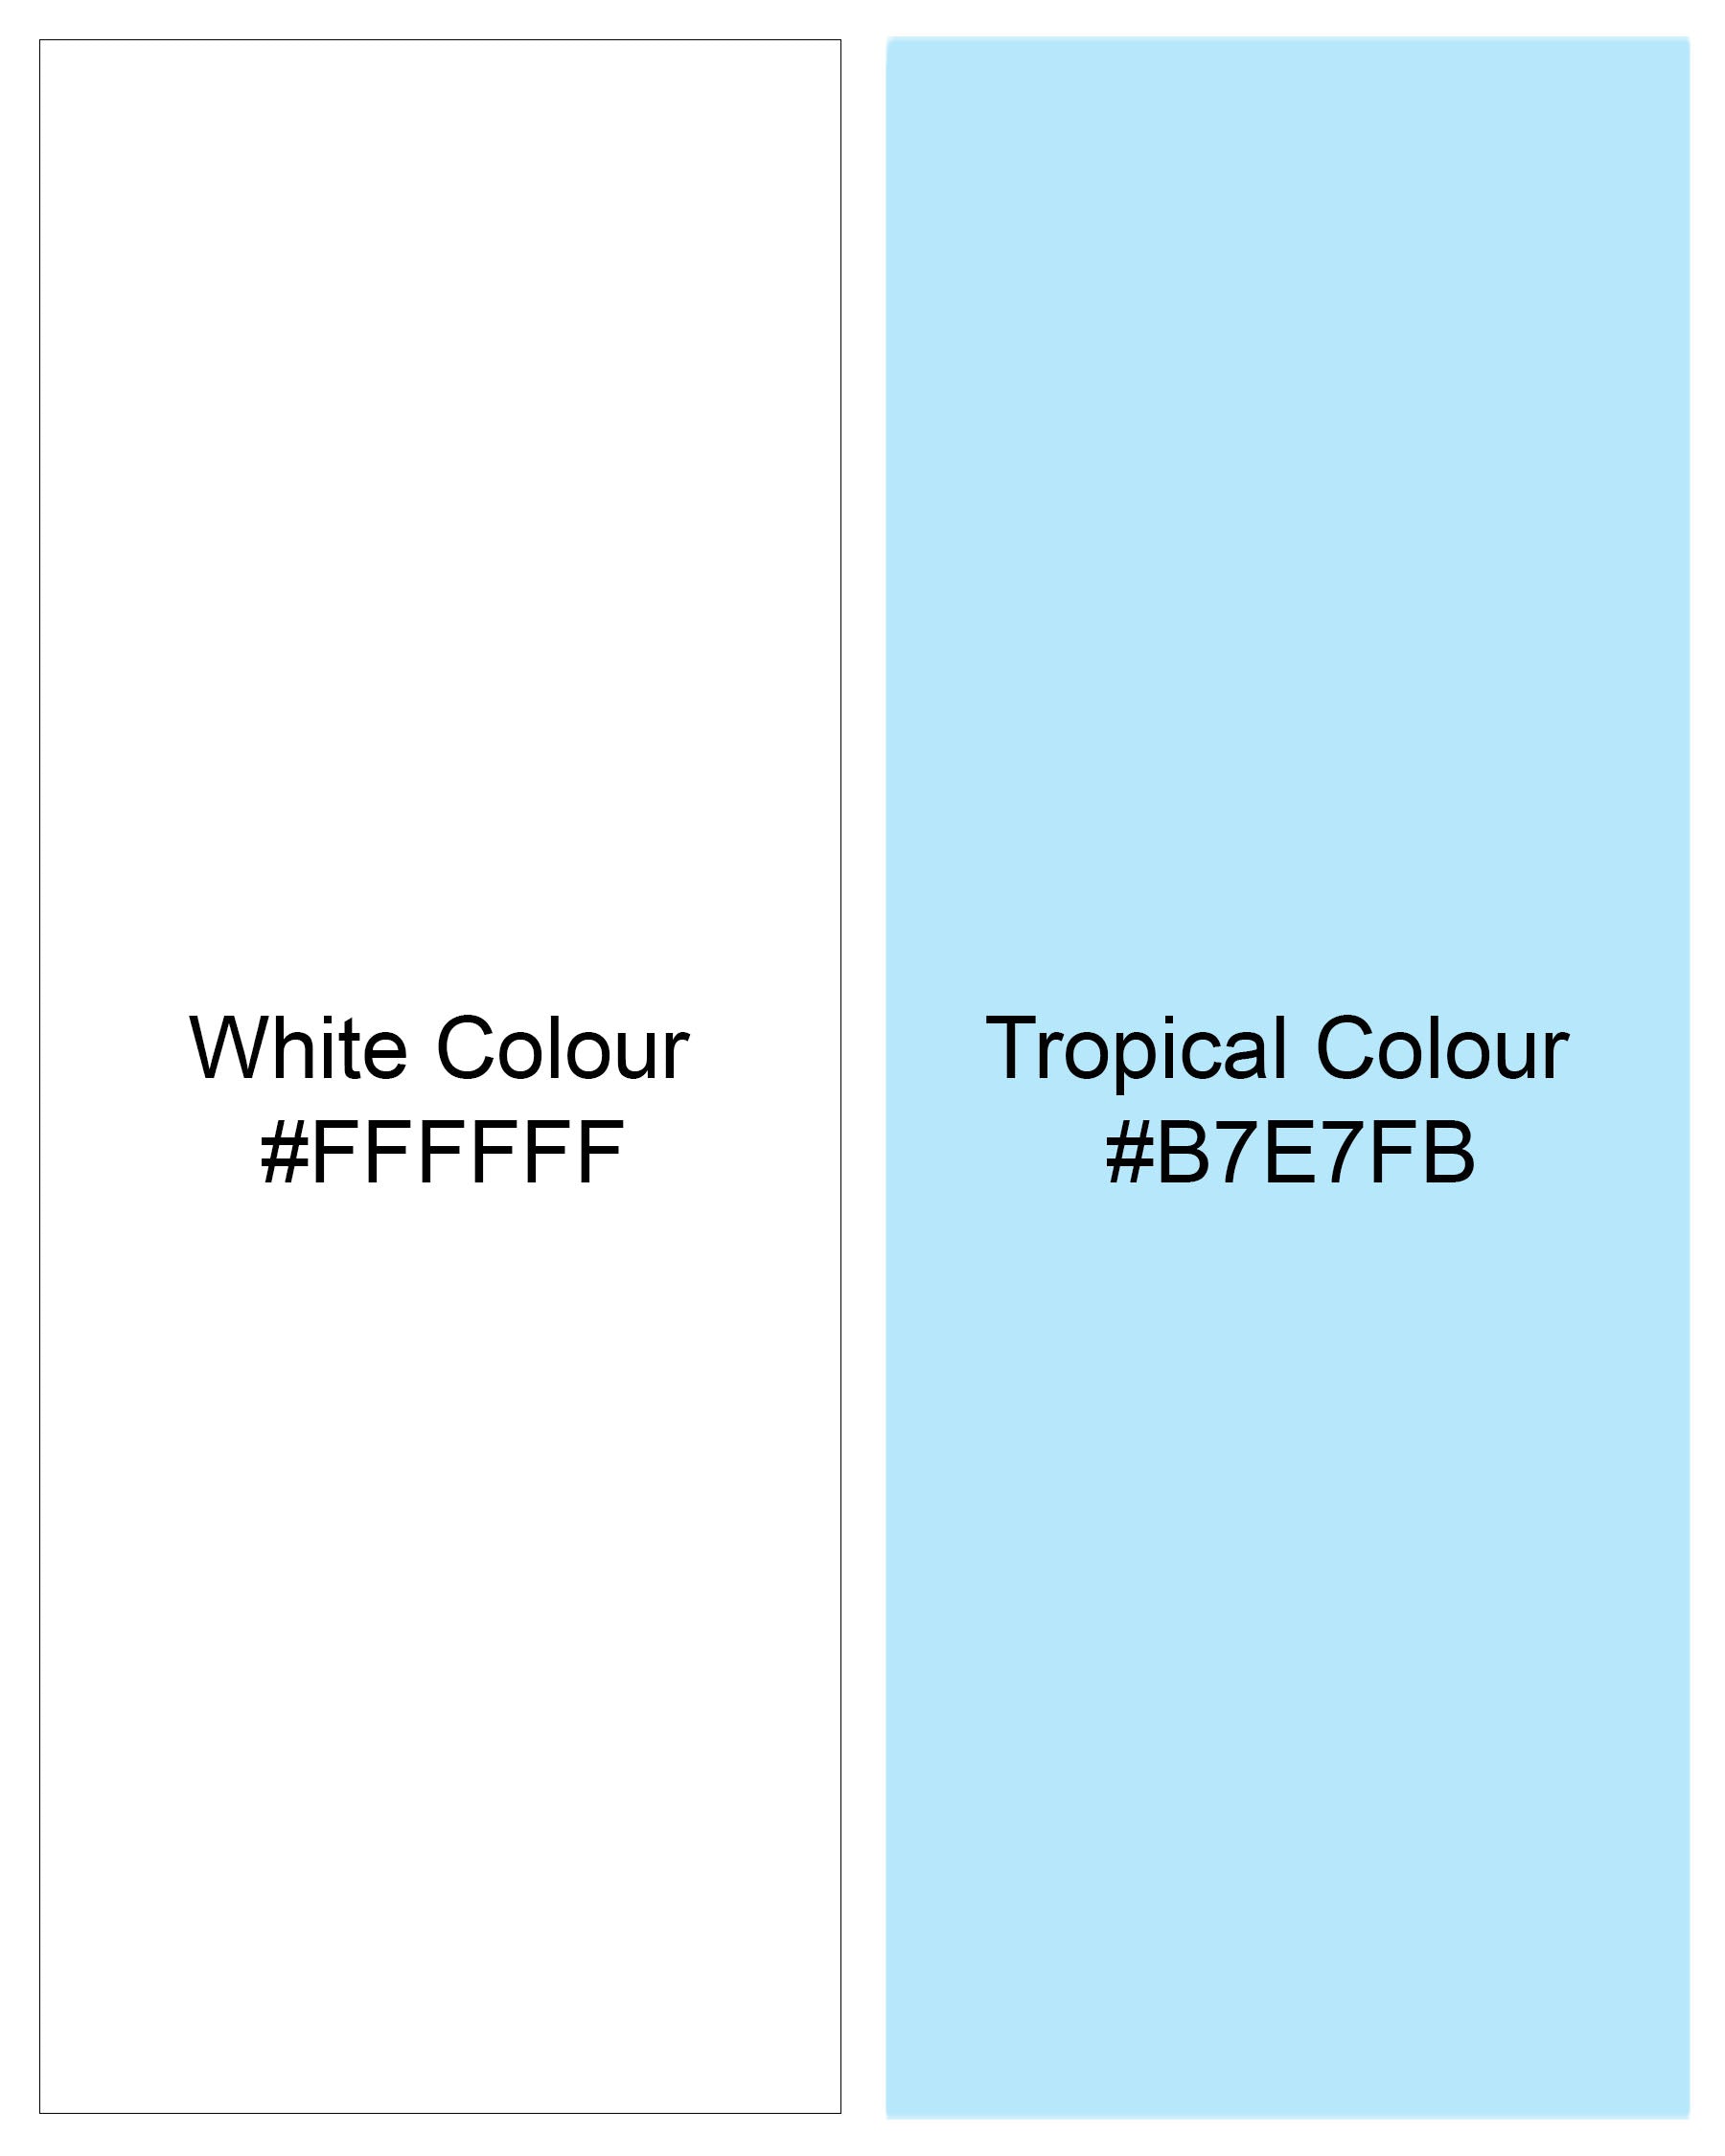 Tropical Blue and White Scalloped Pattern Printed Premium Cotton Kurta Shirt 7915-KS -38,7915-KS -H-38,7915-KS -39,7915-KS -H-39,7915-KS -40,7915-KS -H-40,7915-KS -42,7915-KS -H-42,7915-KS -44,7915-KS -H-44,7915-KS -46,7915-KS -H-46,7915-KS -48,7915-KS -H-48,7915-KS -50,7915-KS -H-50,7915-KS -52,7915-KS -H-52